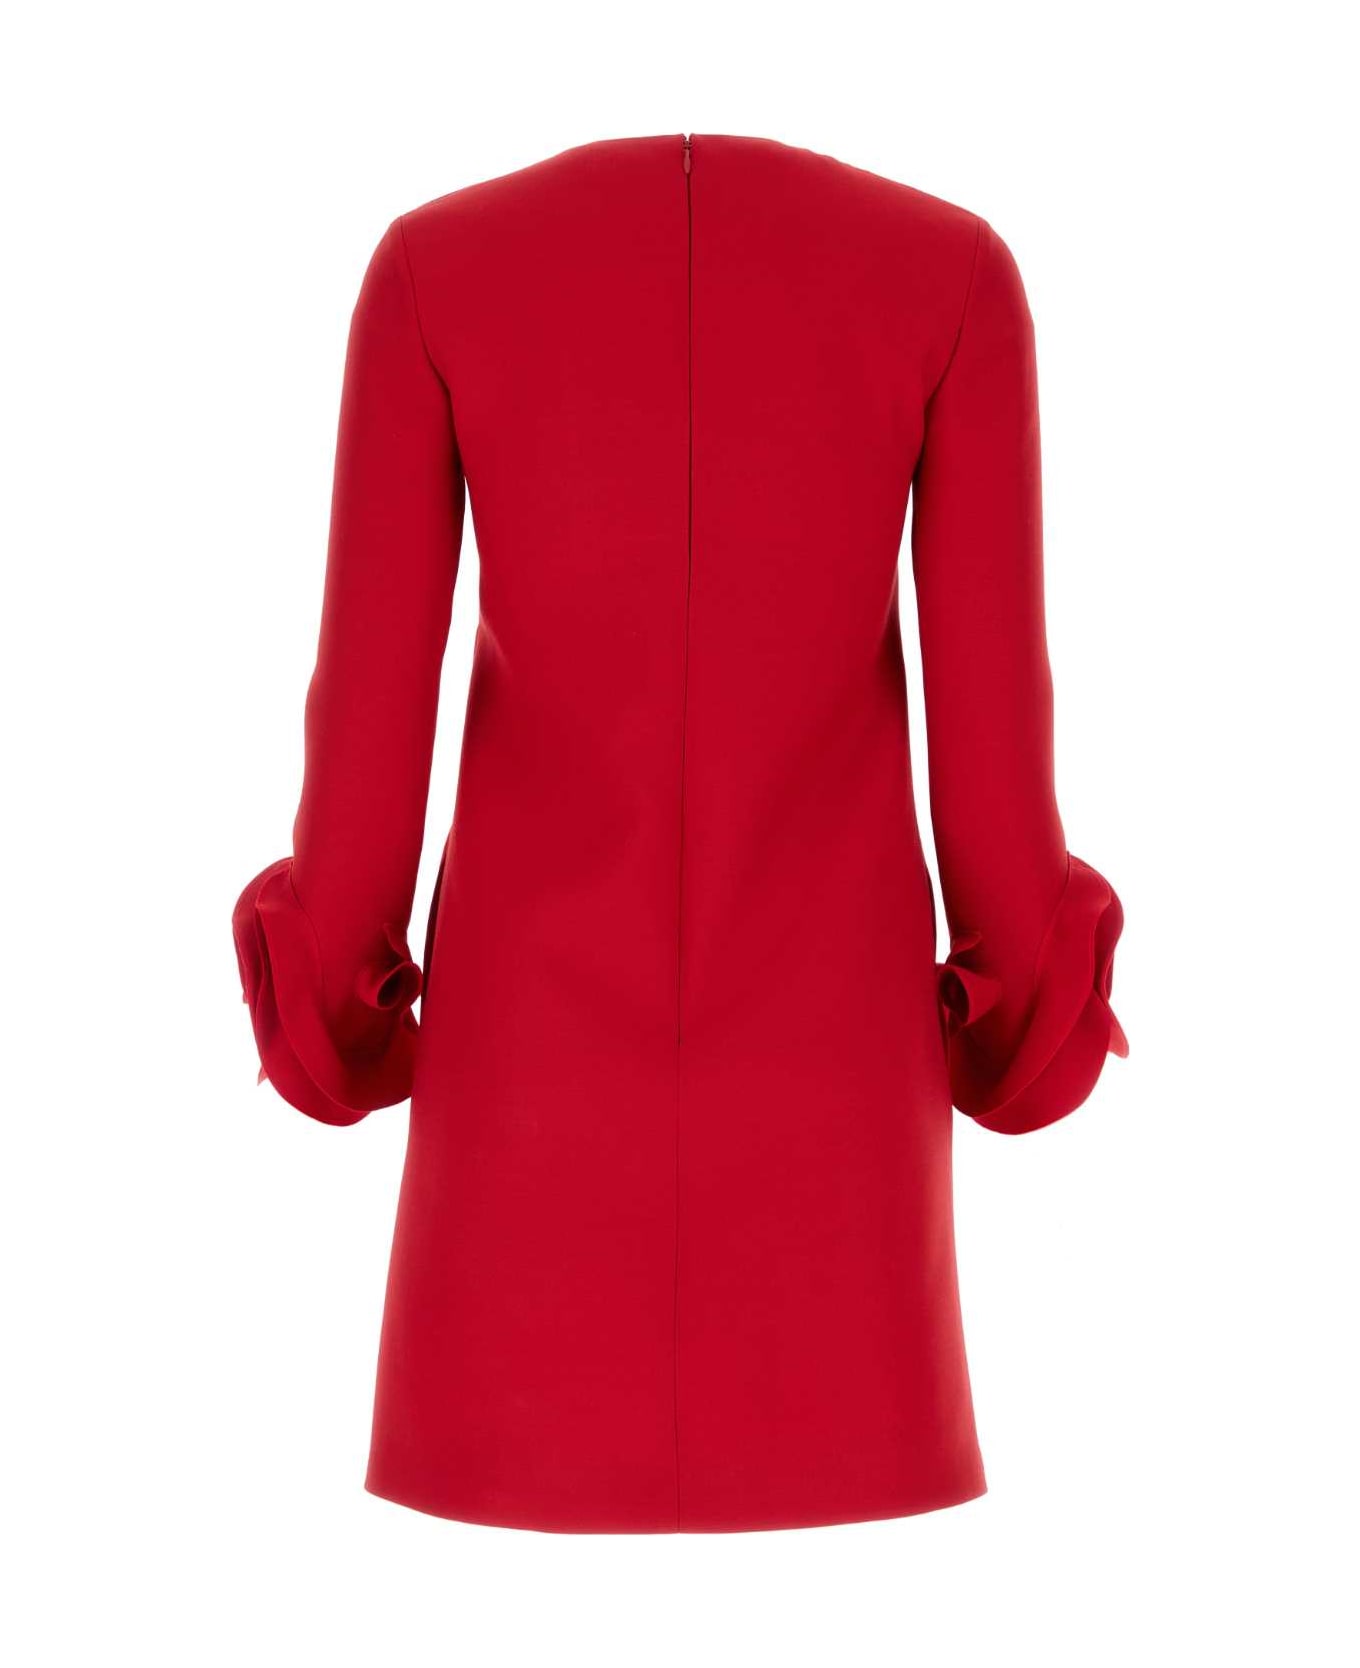 Valentino Garavani Red Wool Blend Dress - ROSSO